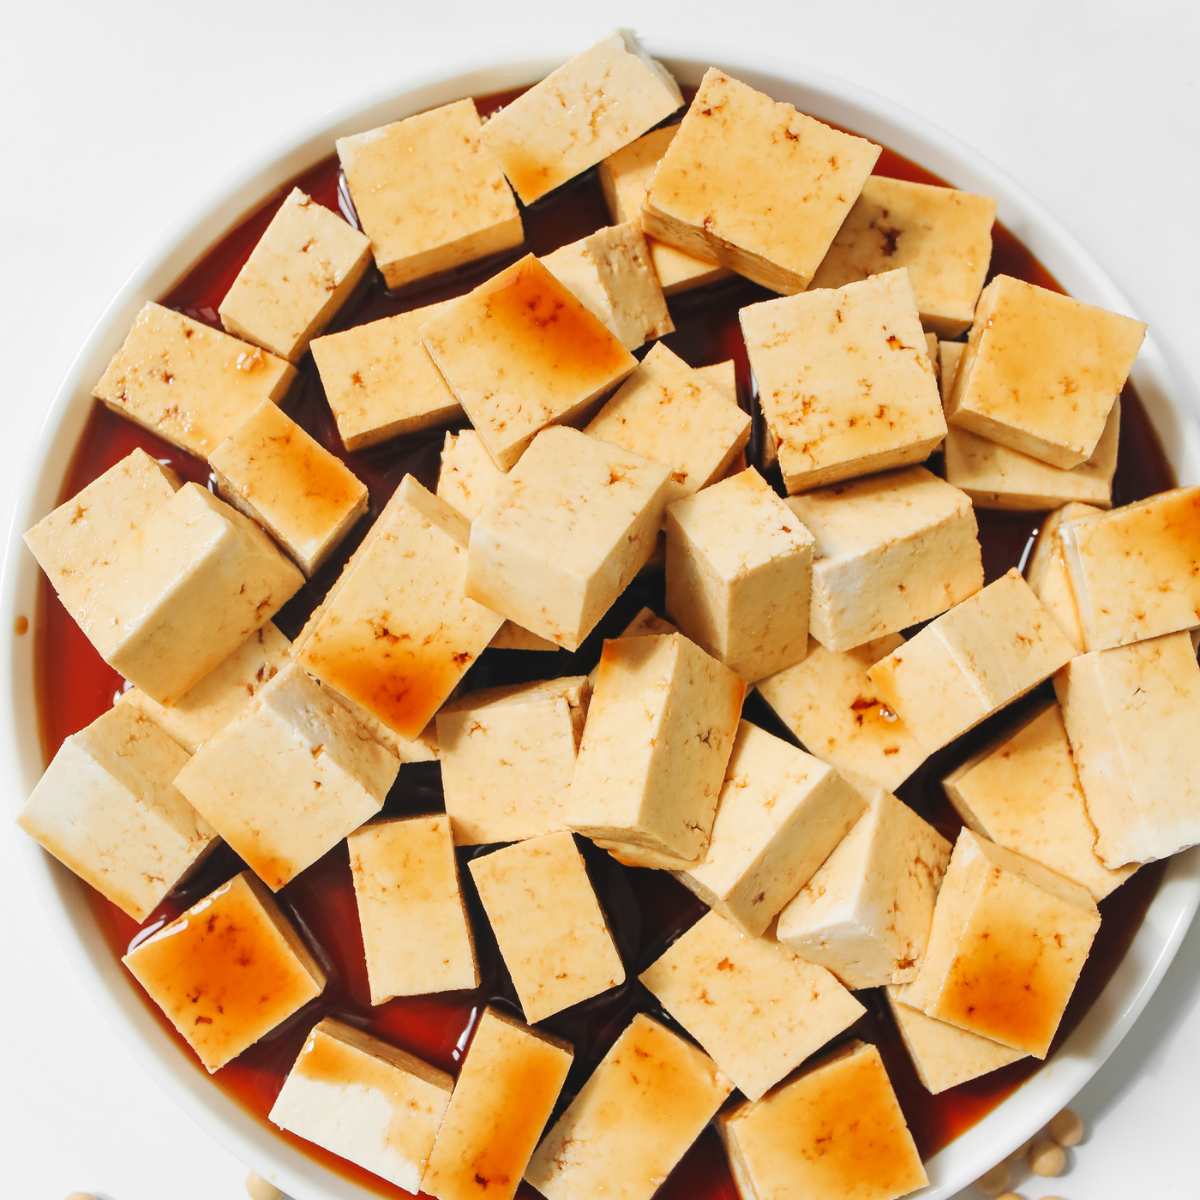 Cubed tofu marinating in coconut aminos.